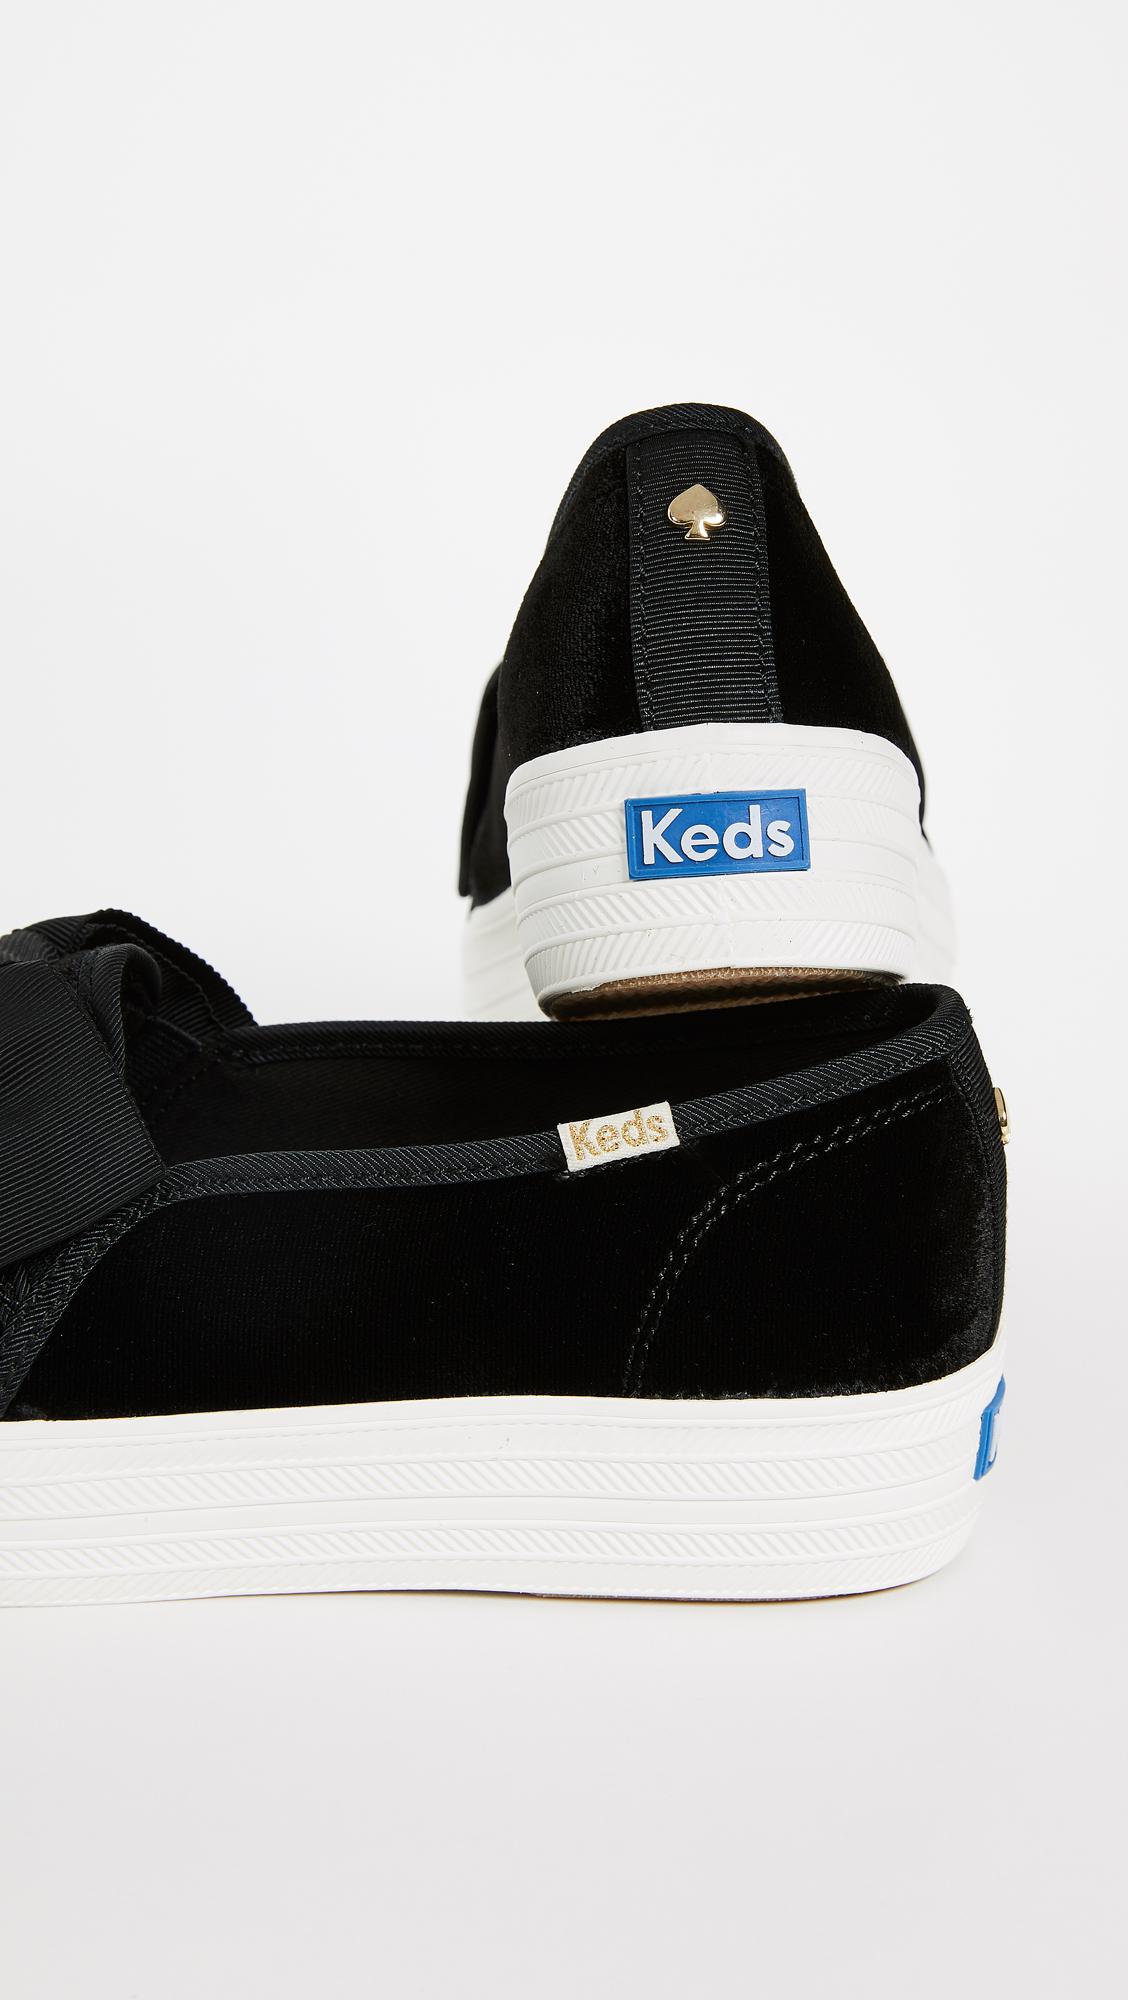 Keds Velvet X Kate Spade New York Triple Decker Sneakers in Black 